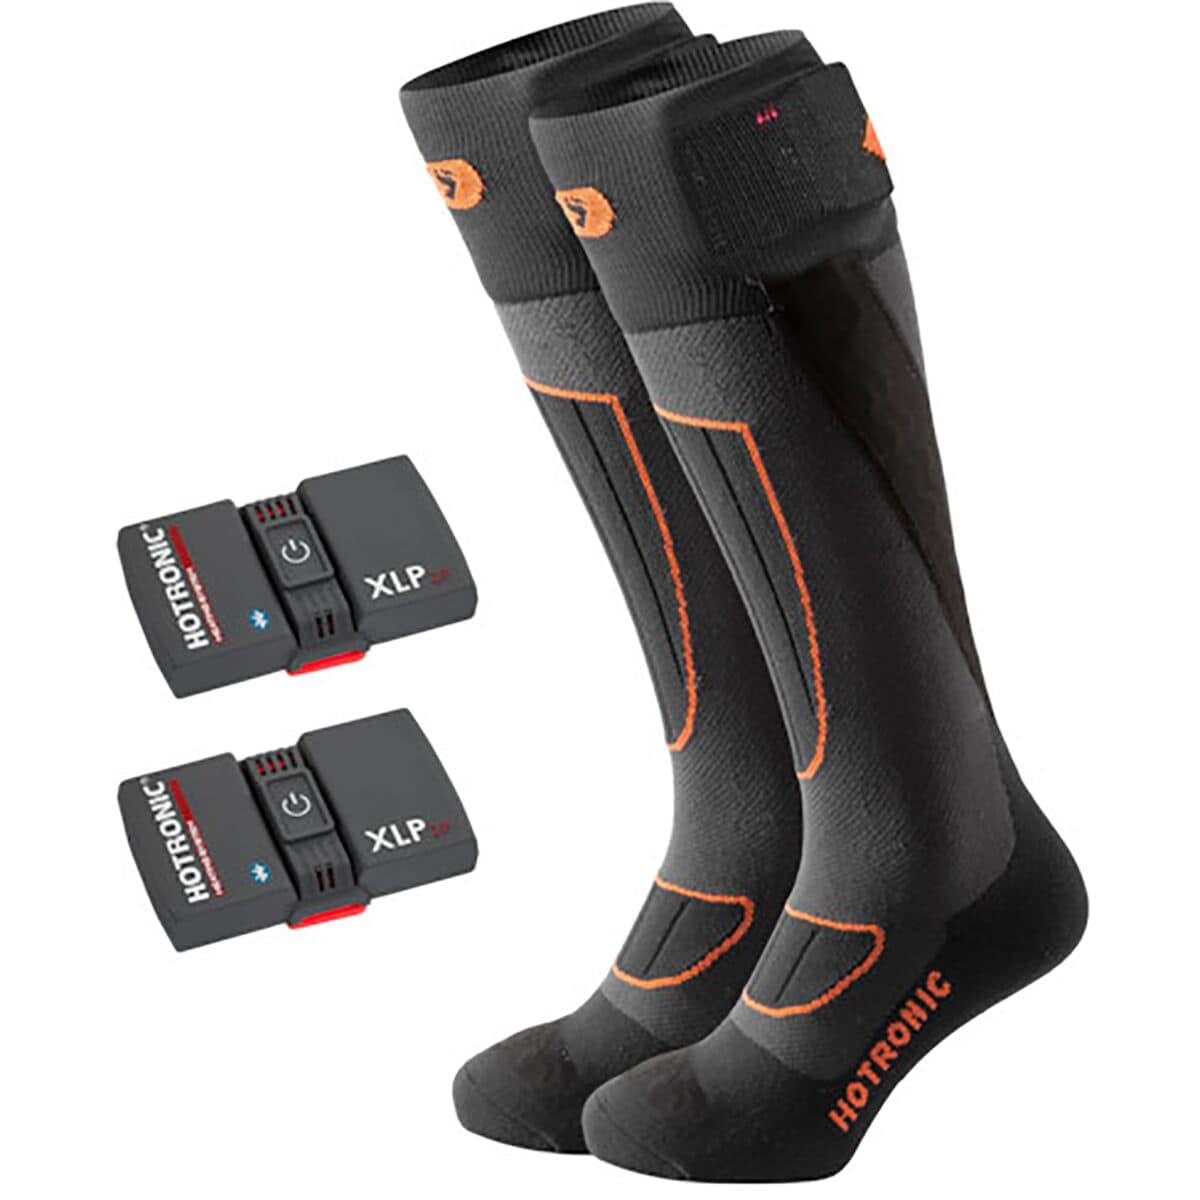 Hotronic XLP 2P BT Surround Comfort Heat Sock Set Black/Orange